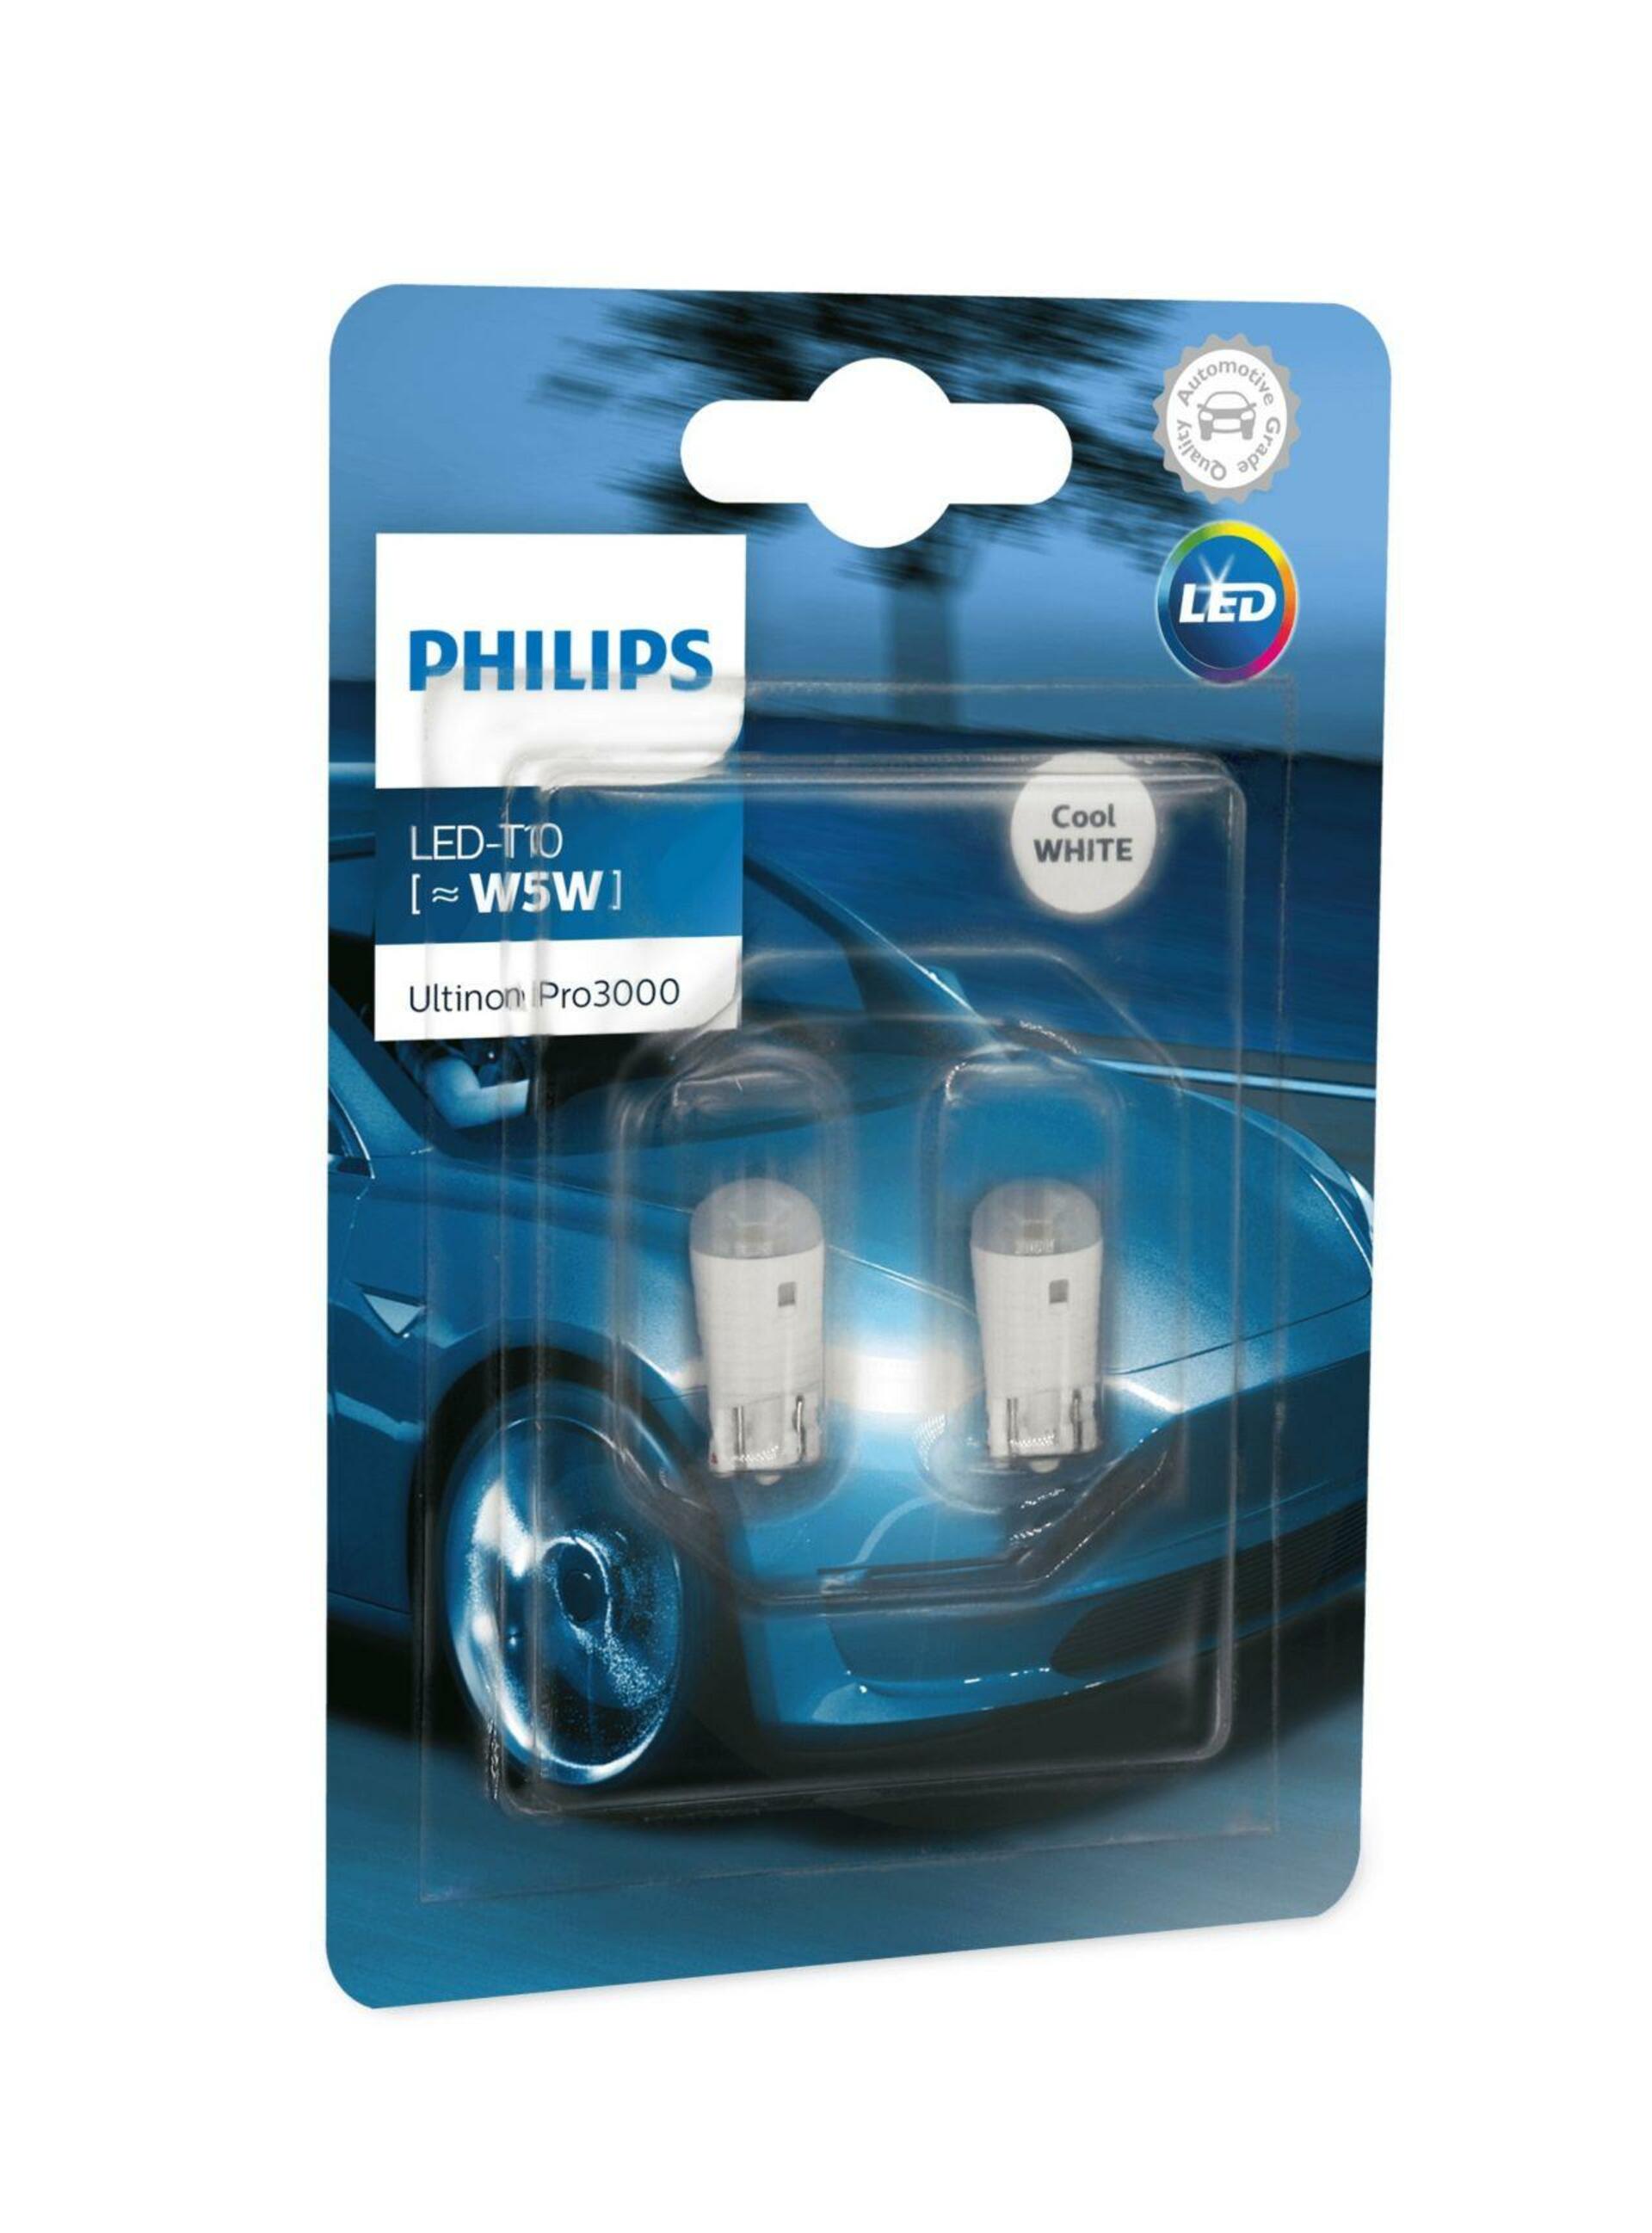 Philips LED W5W 12V 0.6W W21x9.5d Ultinon Pro3000 SI NOECE 2ks blistr 11961U30CWB2